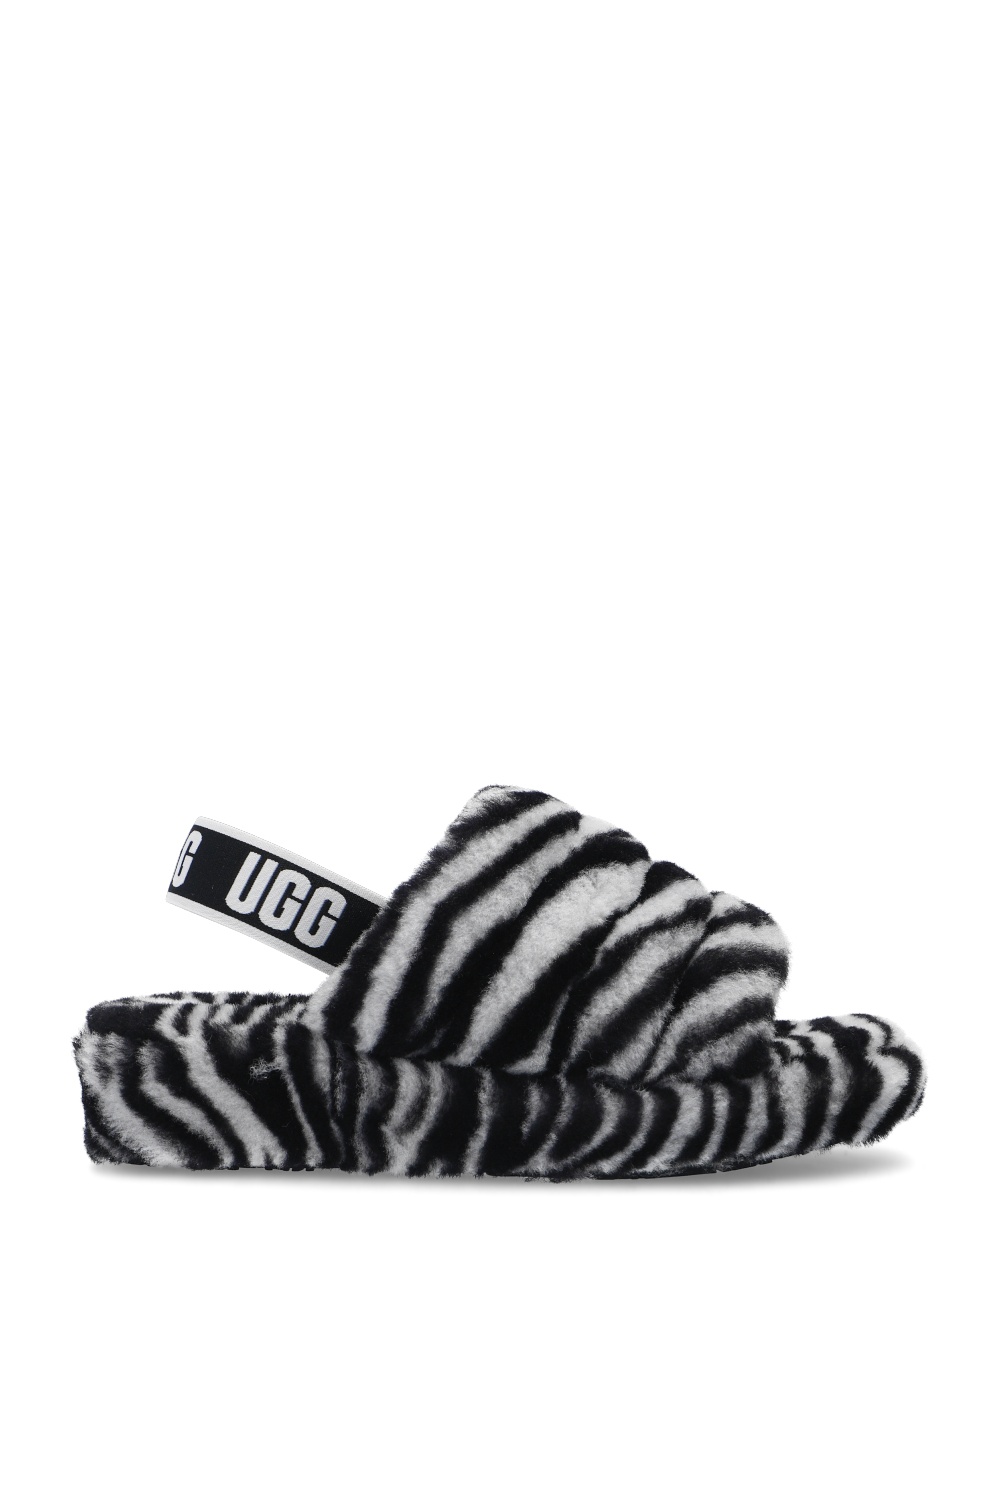 ugg slippers zebra